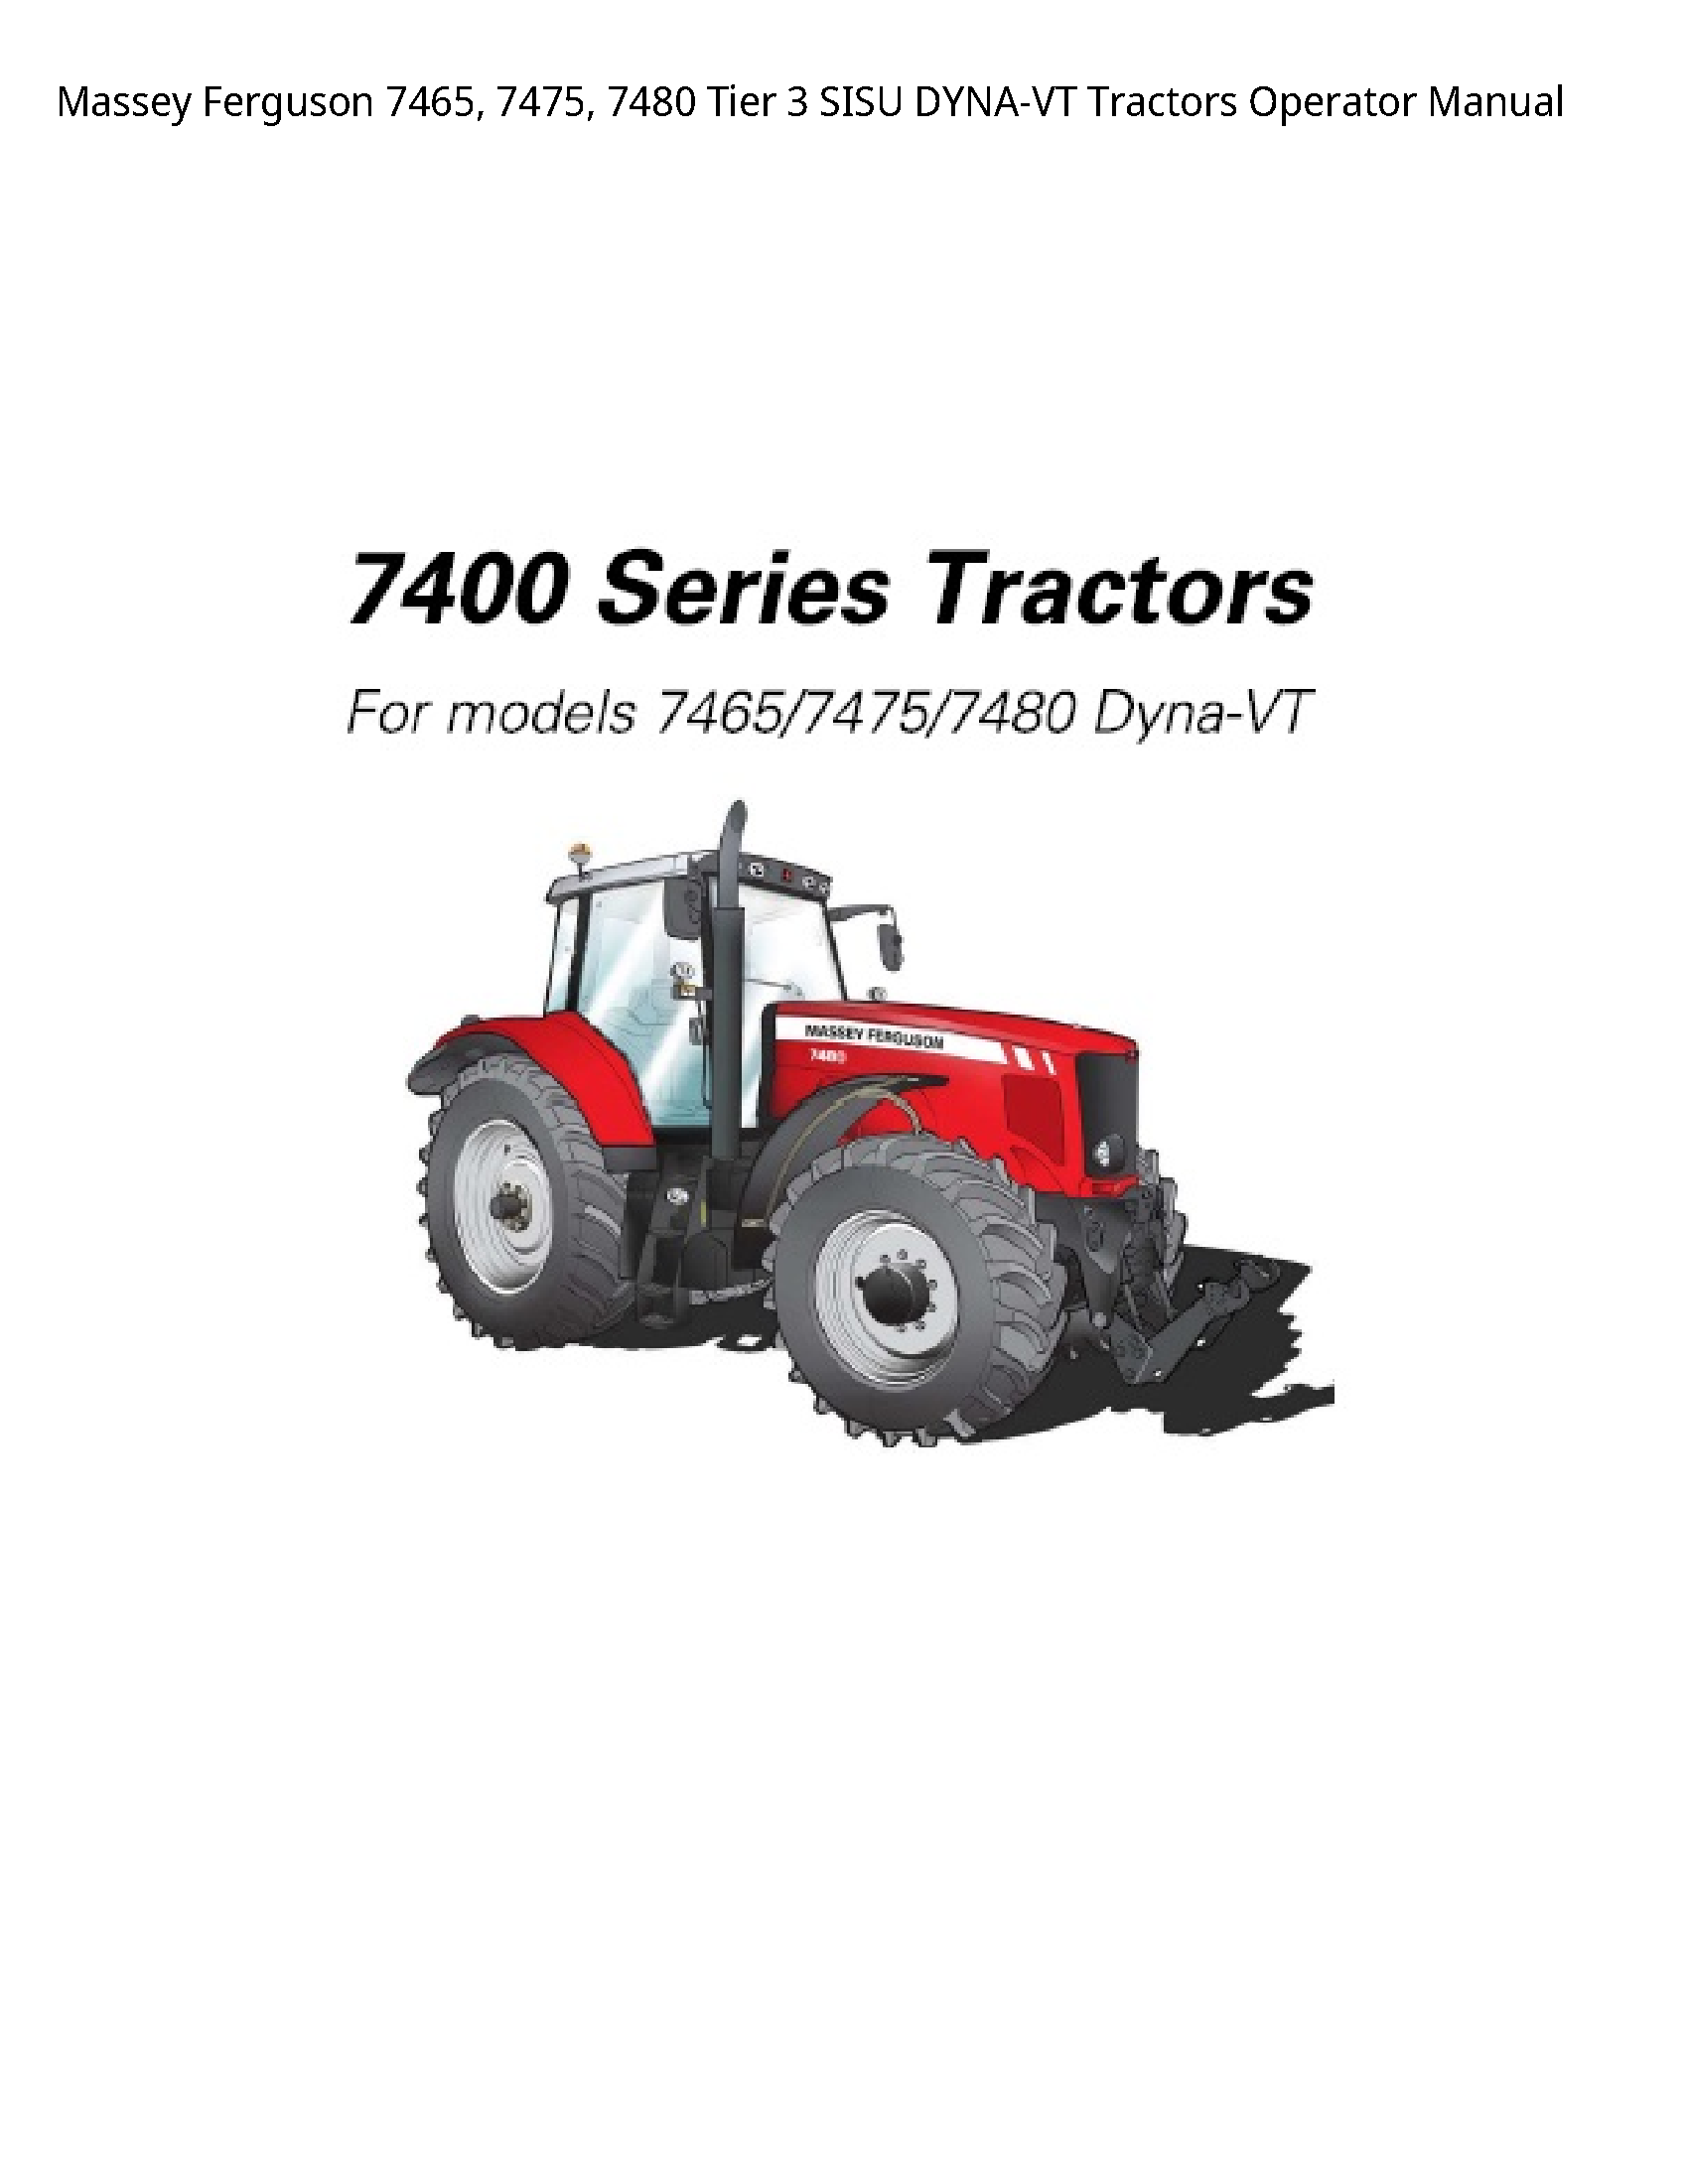 Massey Ferguson 7465 Tier SISU DYNA-VT Tractors Operator manual